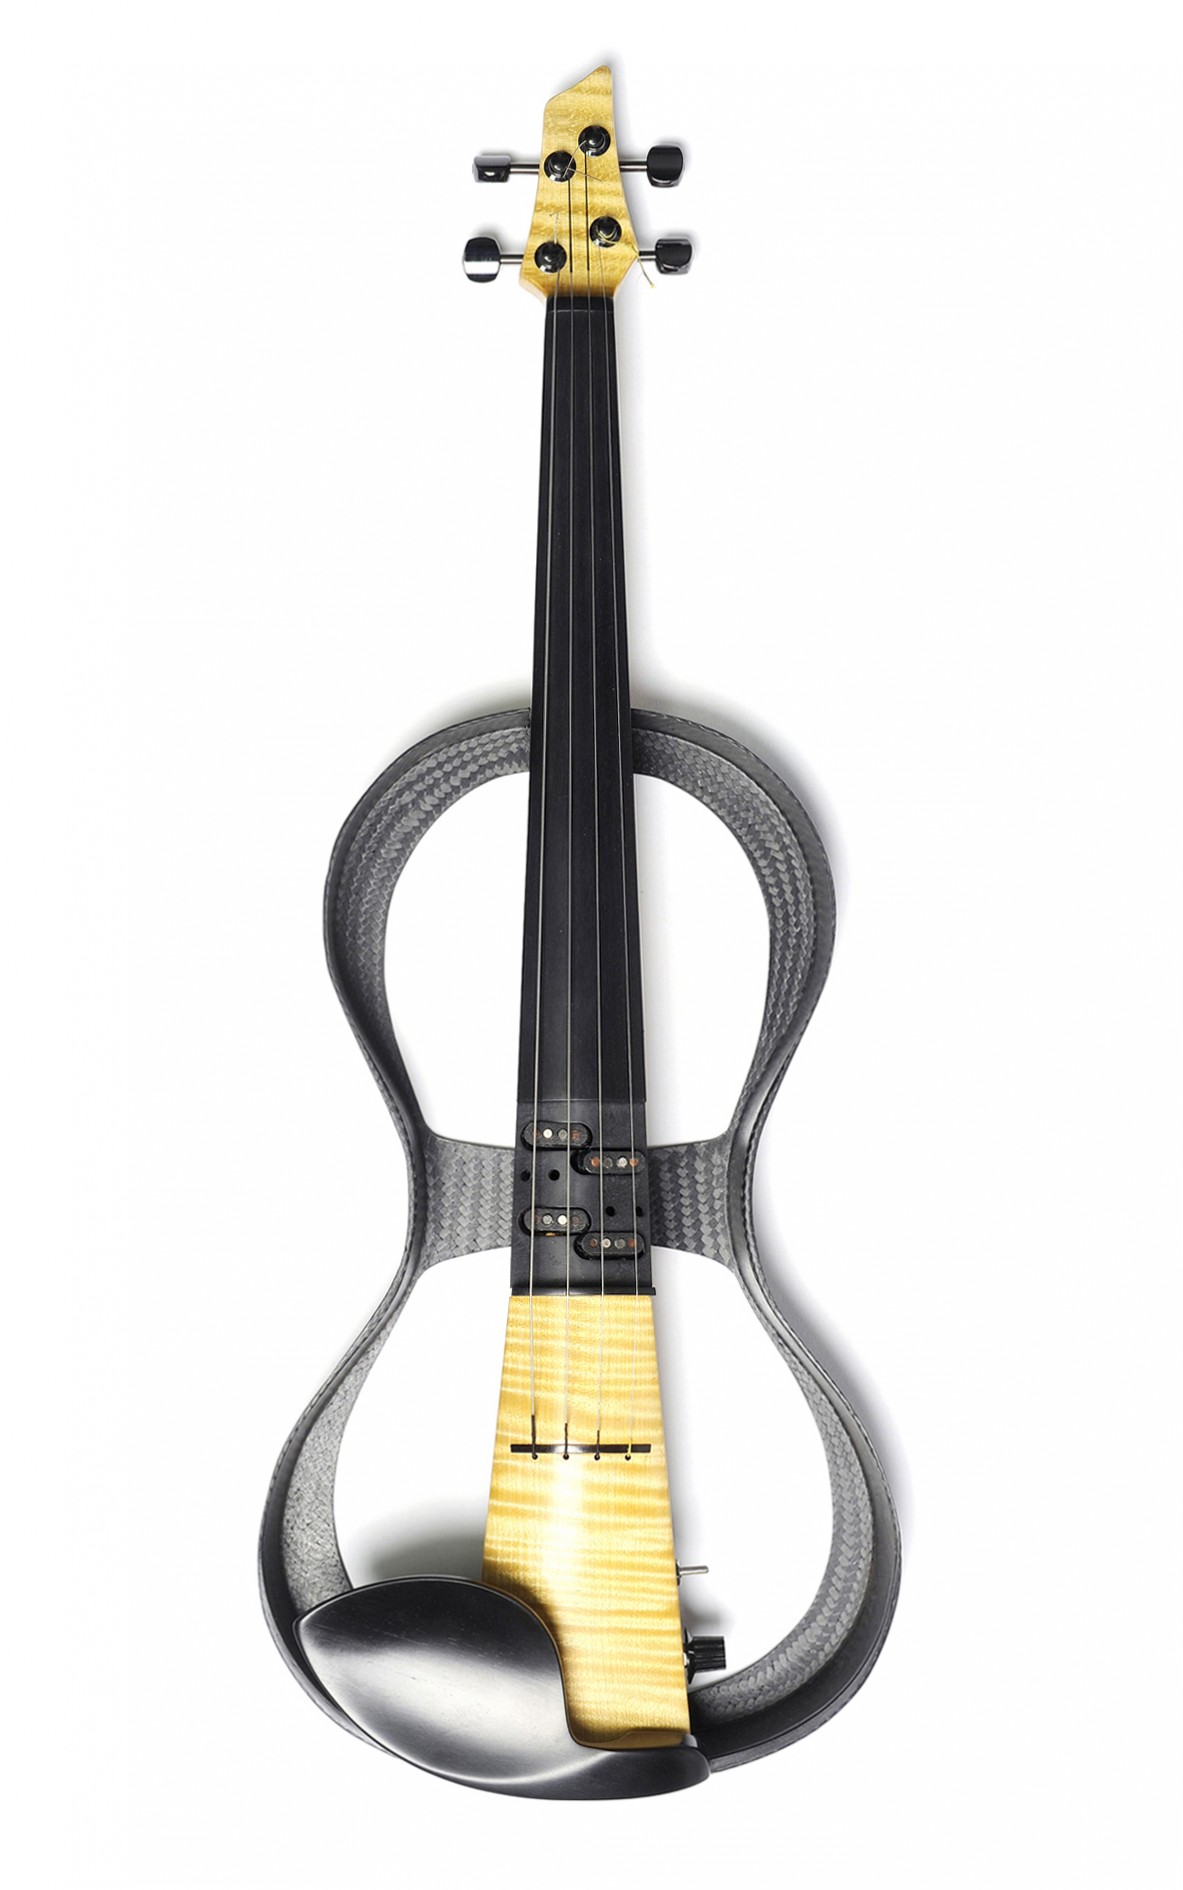 Wolfgang Löffler's "e-Strings", Professional electric violin (silent violin)